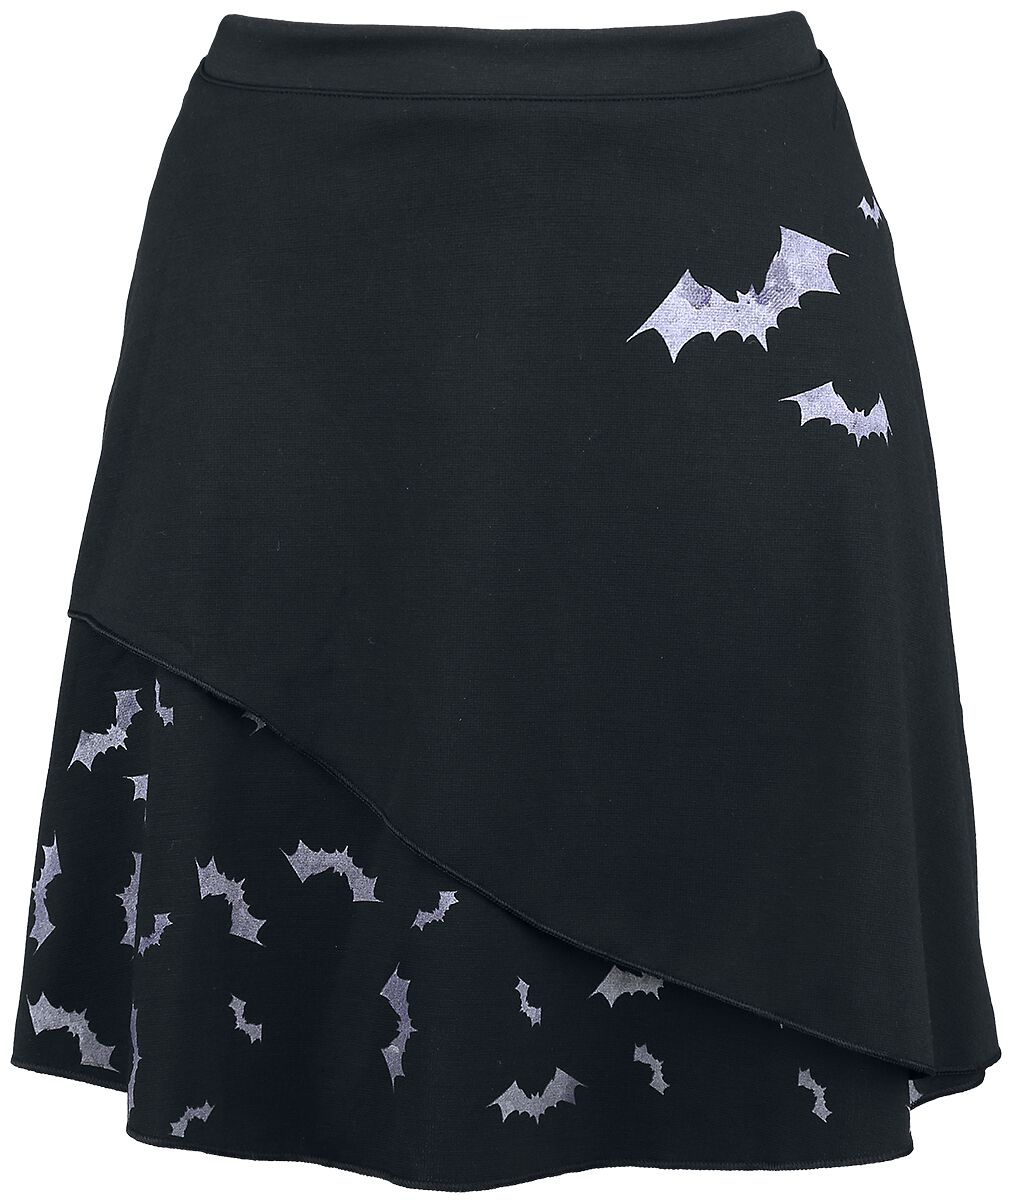 Image of Minigonna Gothic di Outer Vision - Pastel Bats - S a XXL - Donna - nero